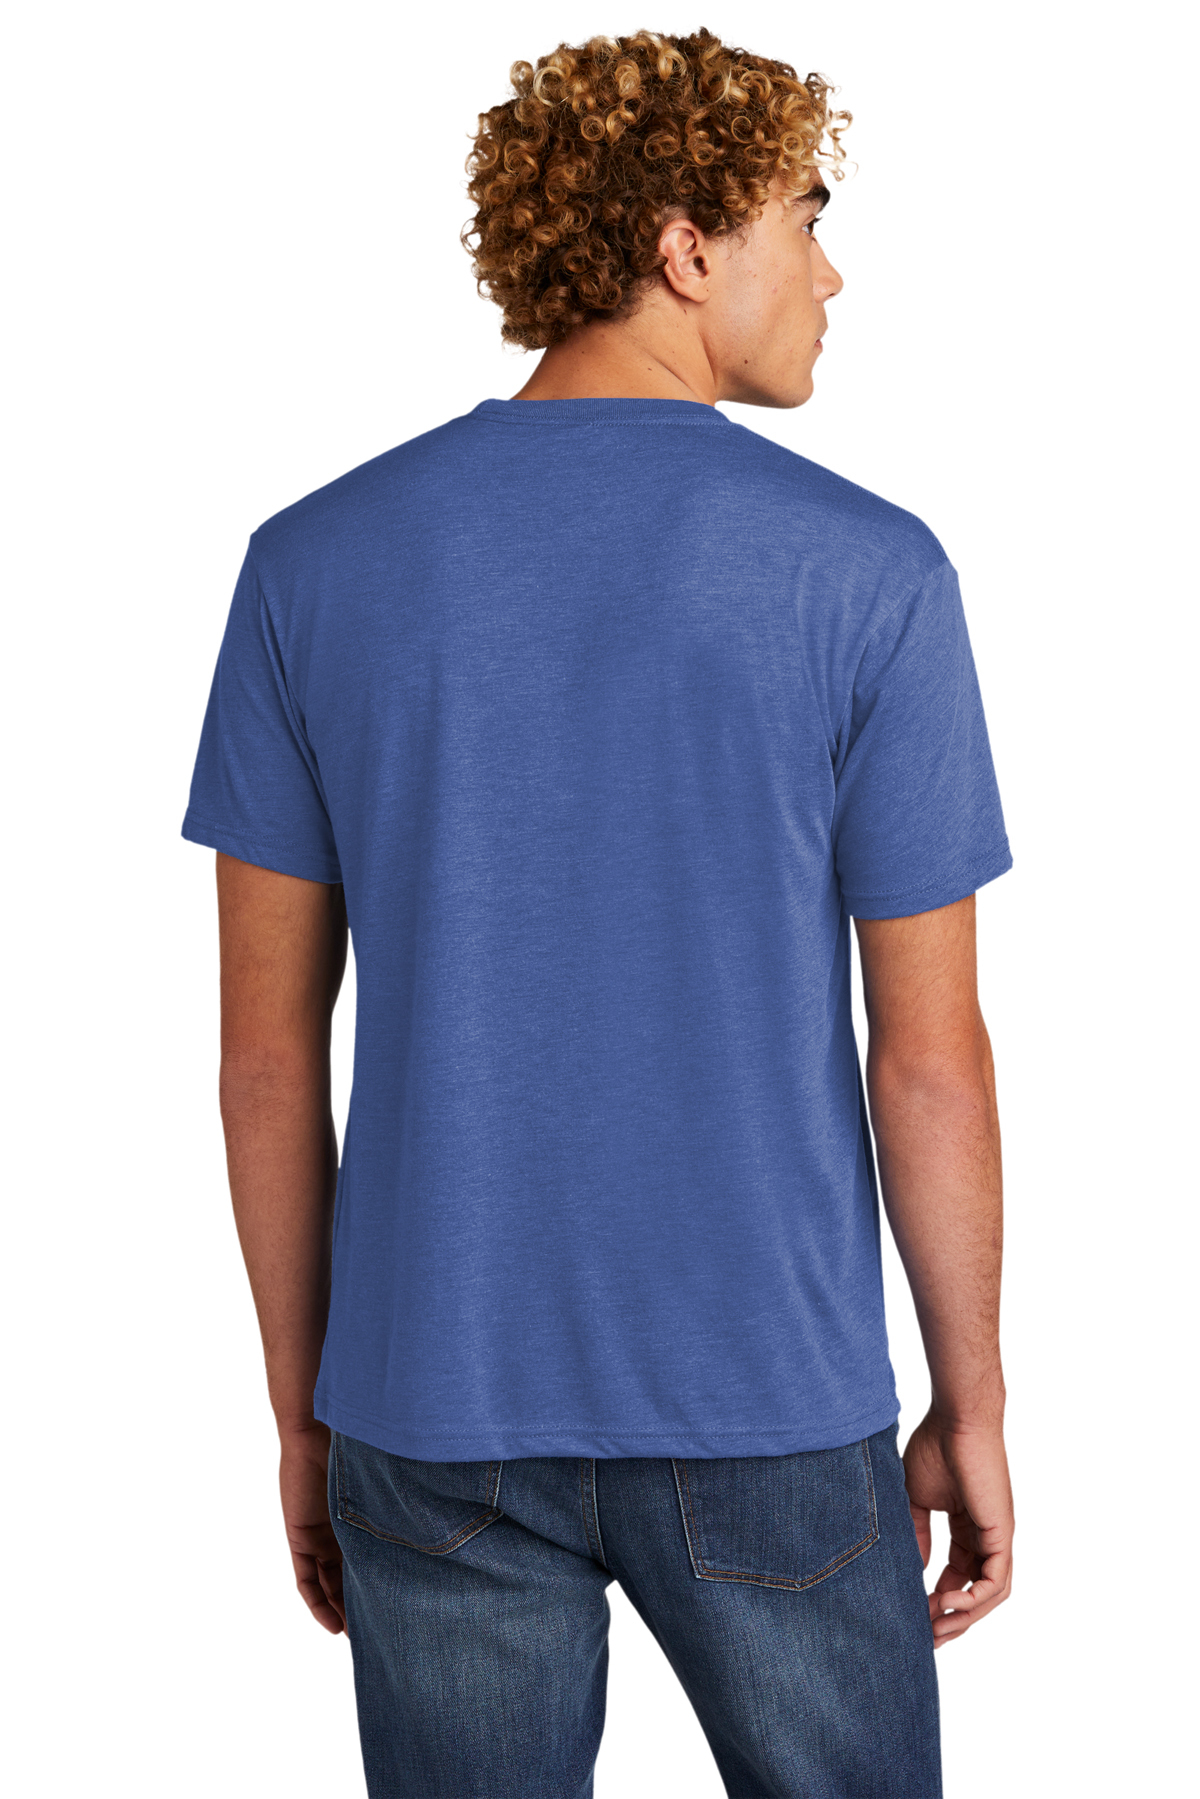 El Cajon City Shamrock Tri-Blend T-Shirt 